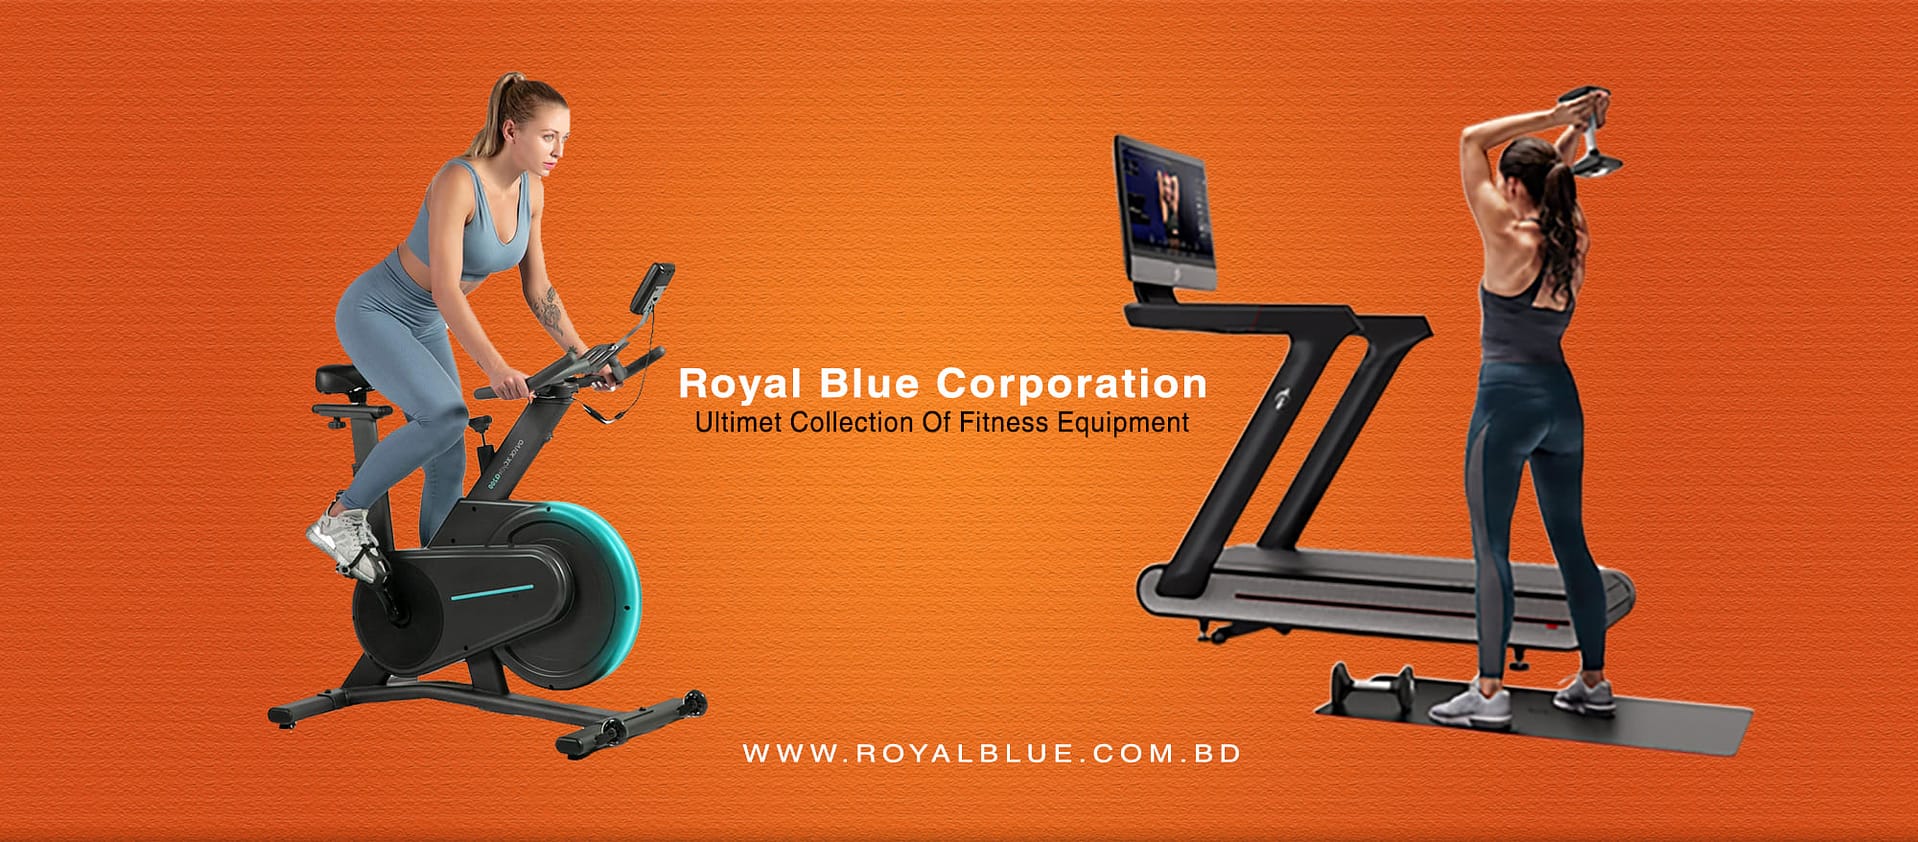 royal blue corporation